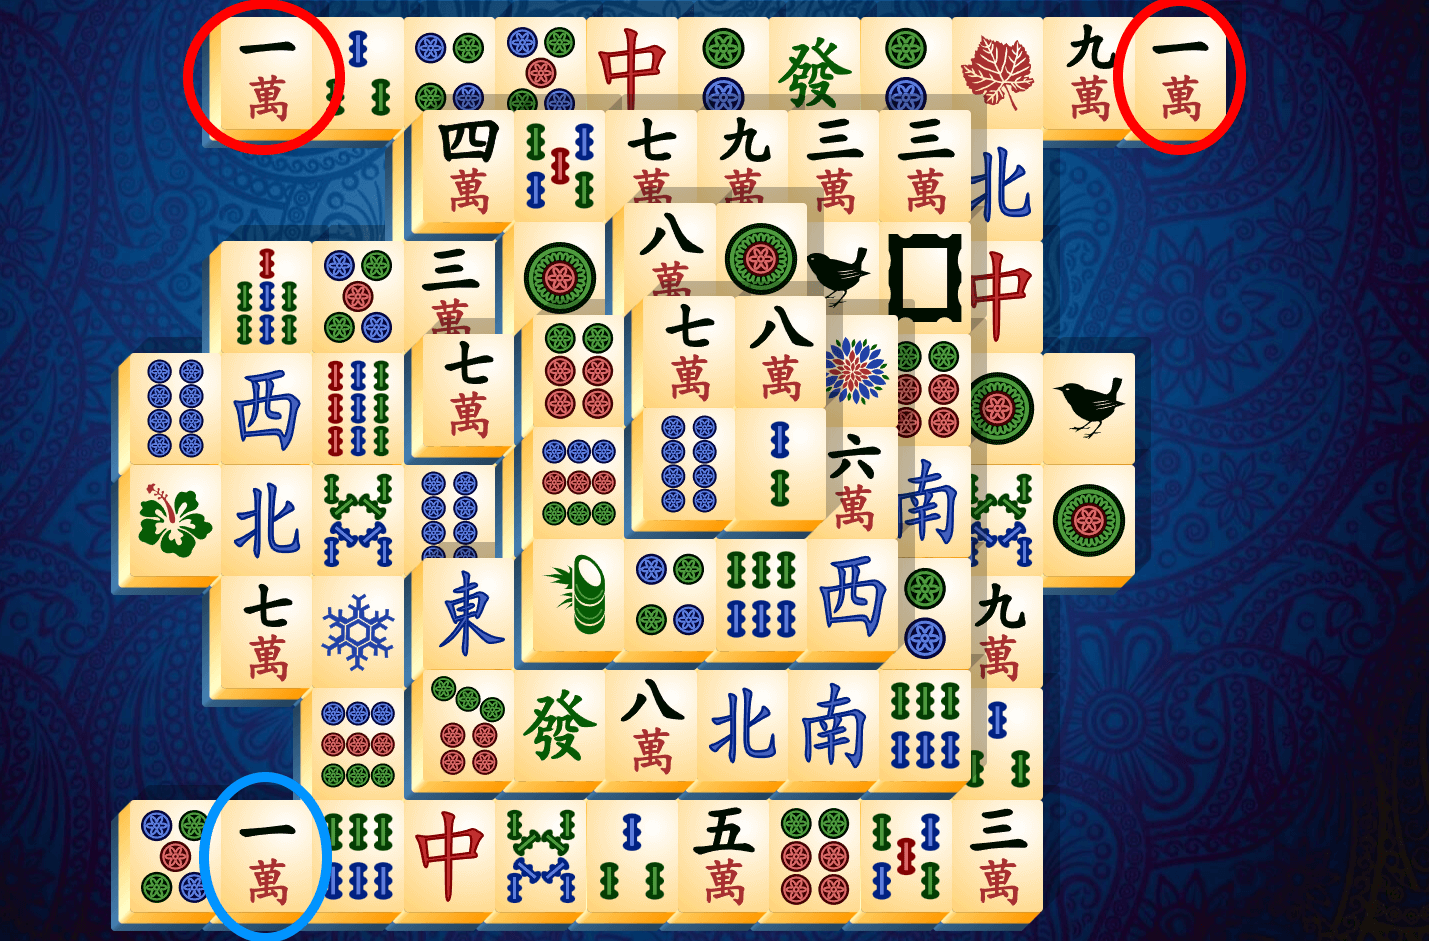 Samouczek Mahjonga jednoosobowego, krok 7